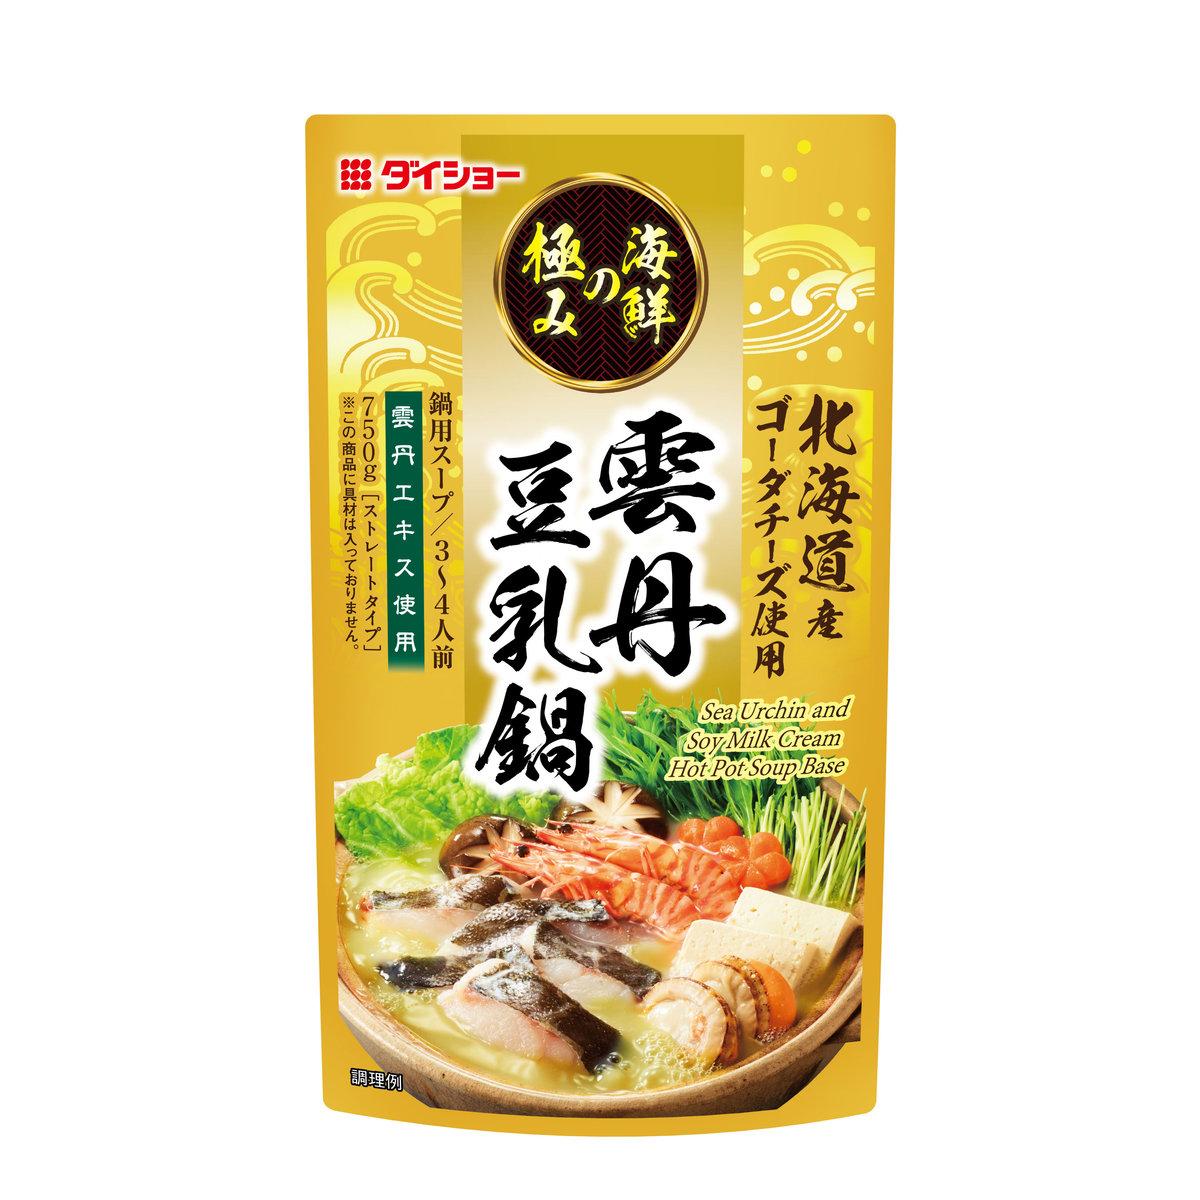 daisho-sea-urchin-and-soy-milk-hotpot-soup